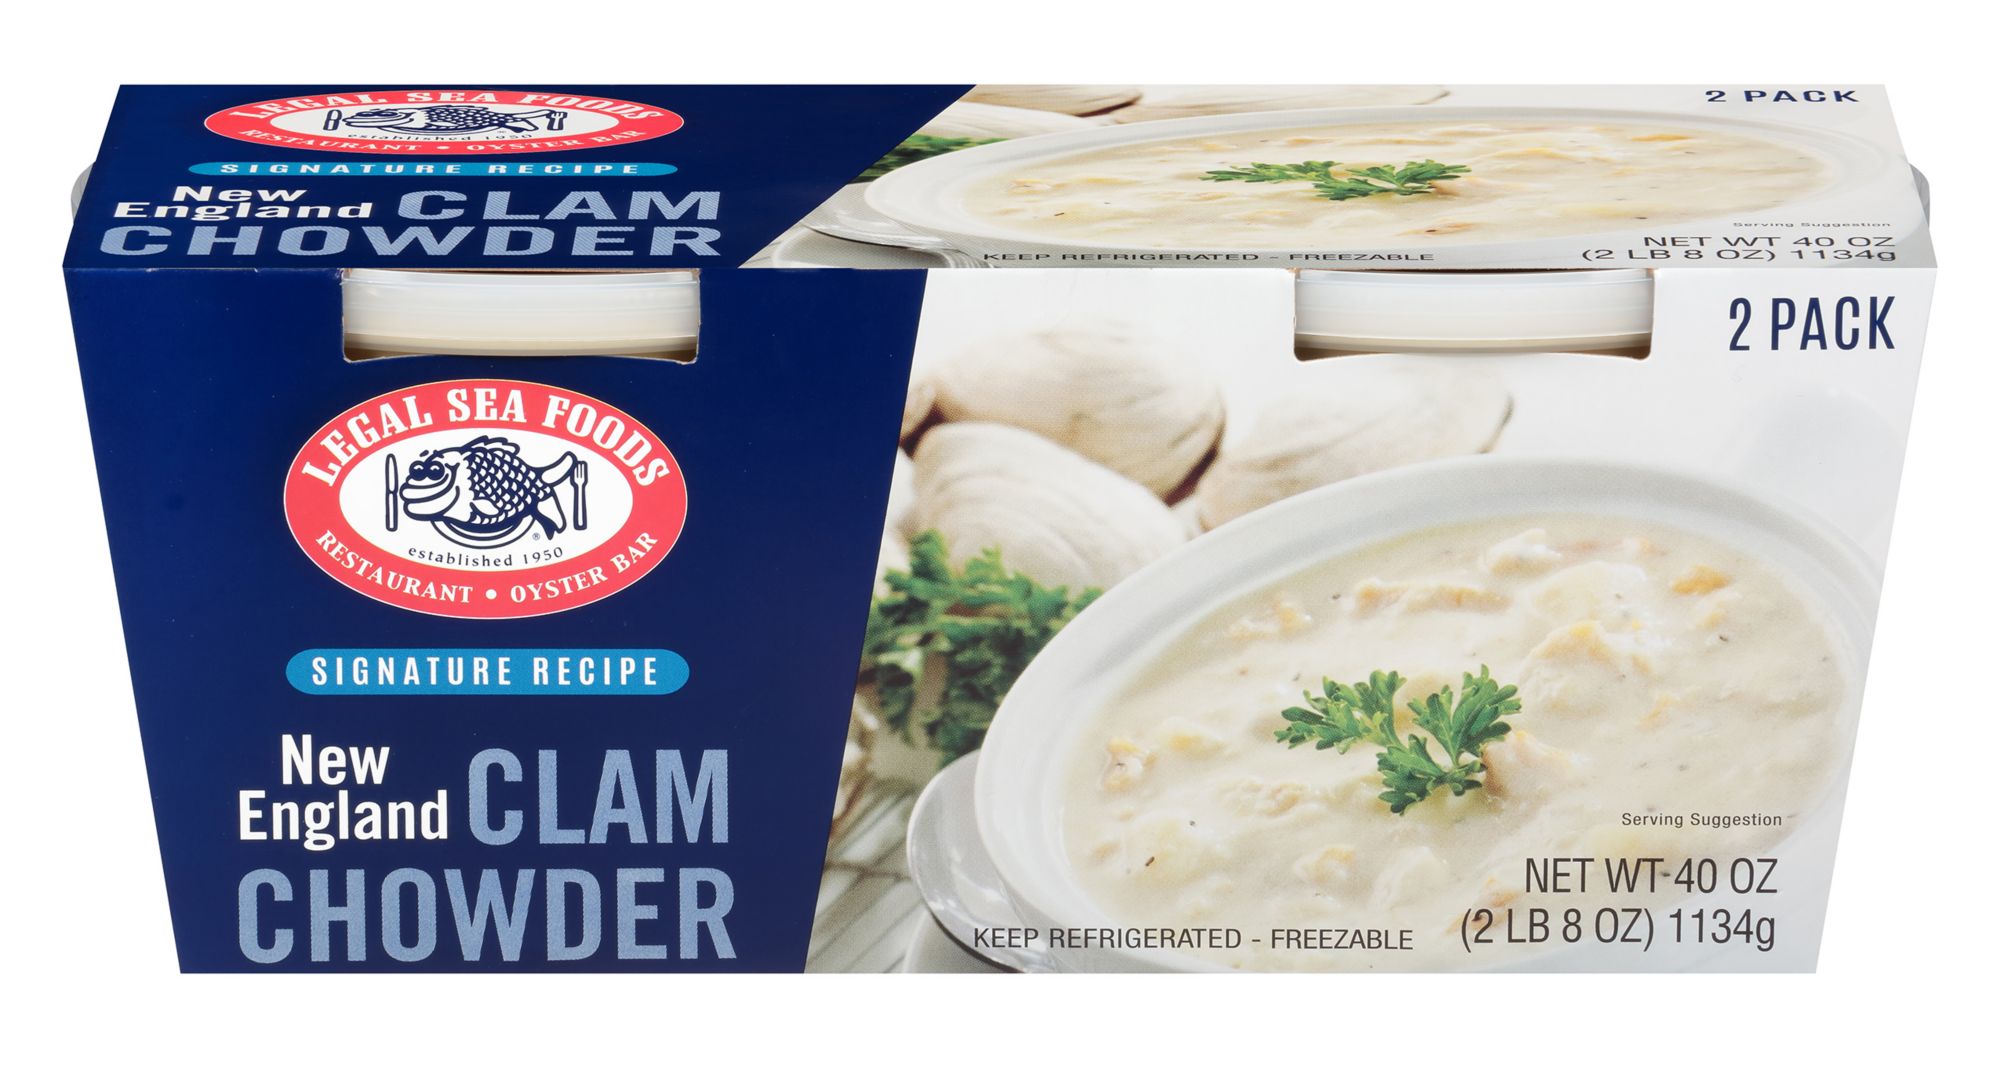 Legal Sea Foods New England Clam Chowder, 2 pk./20 oz.